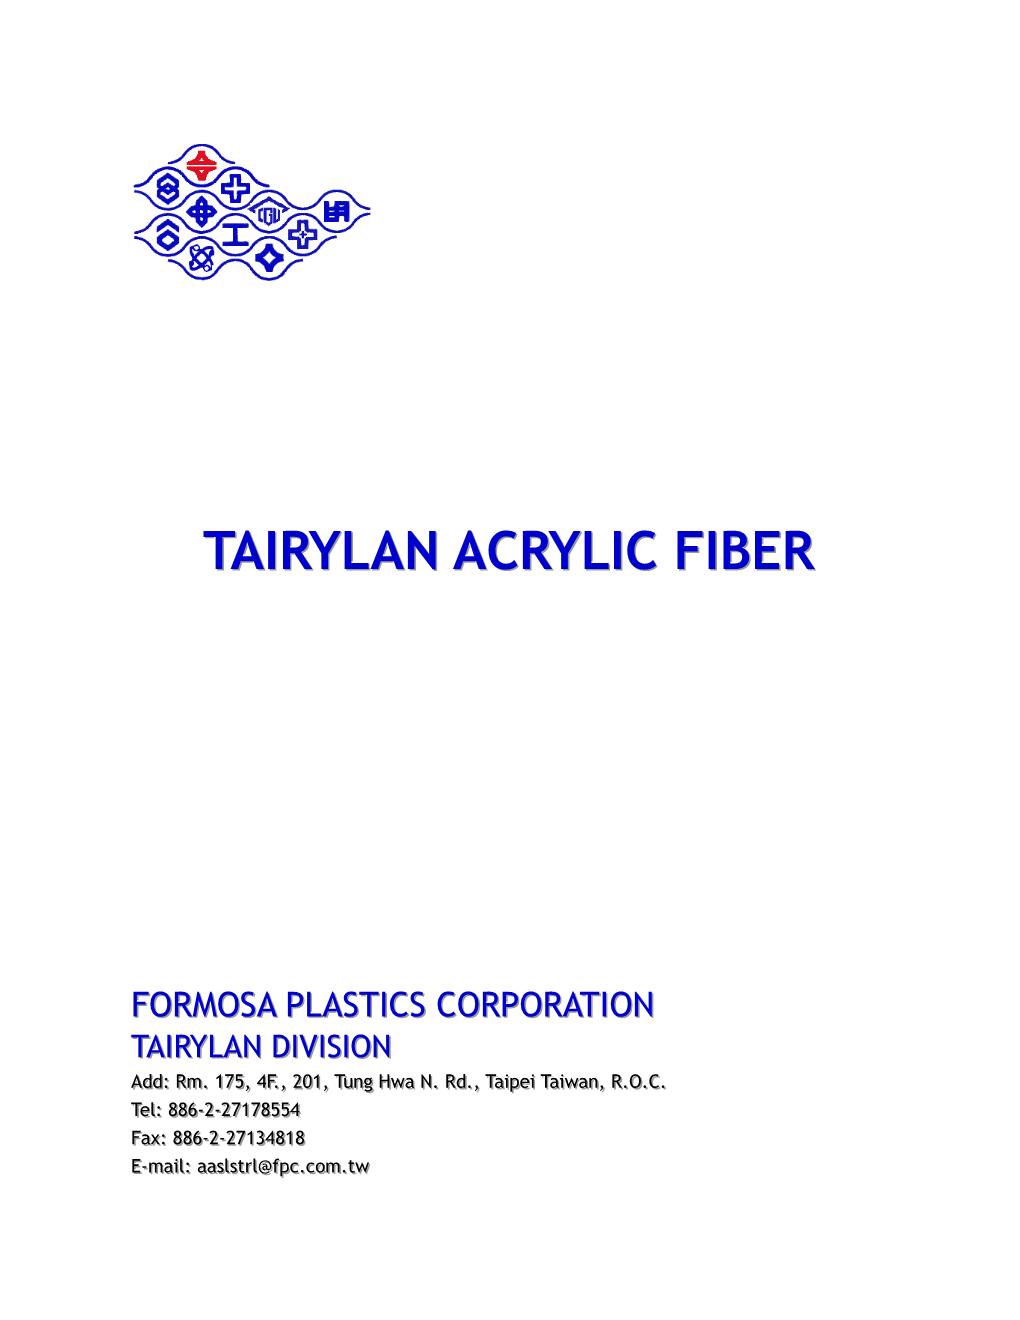 Tairylan Acrylic Fiber